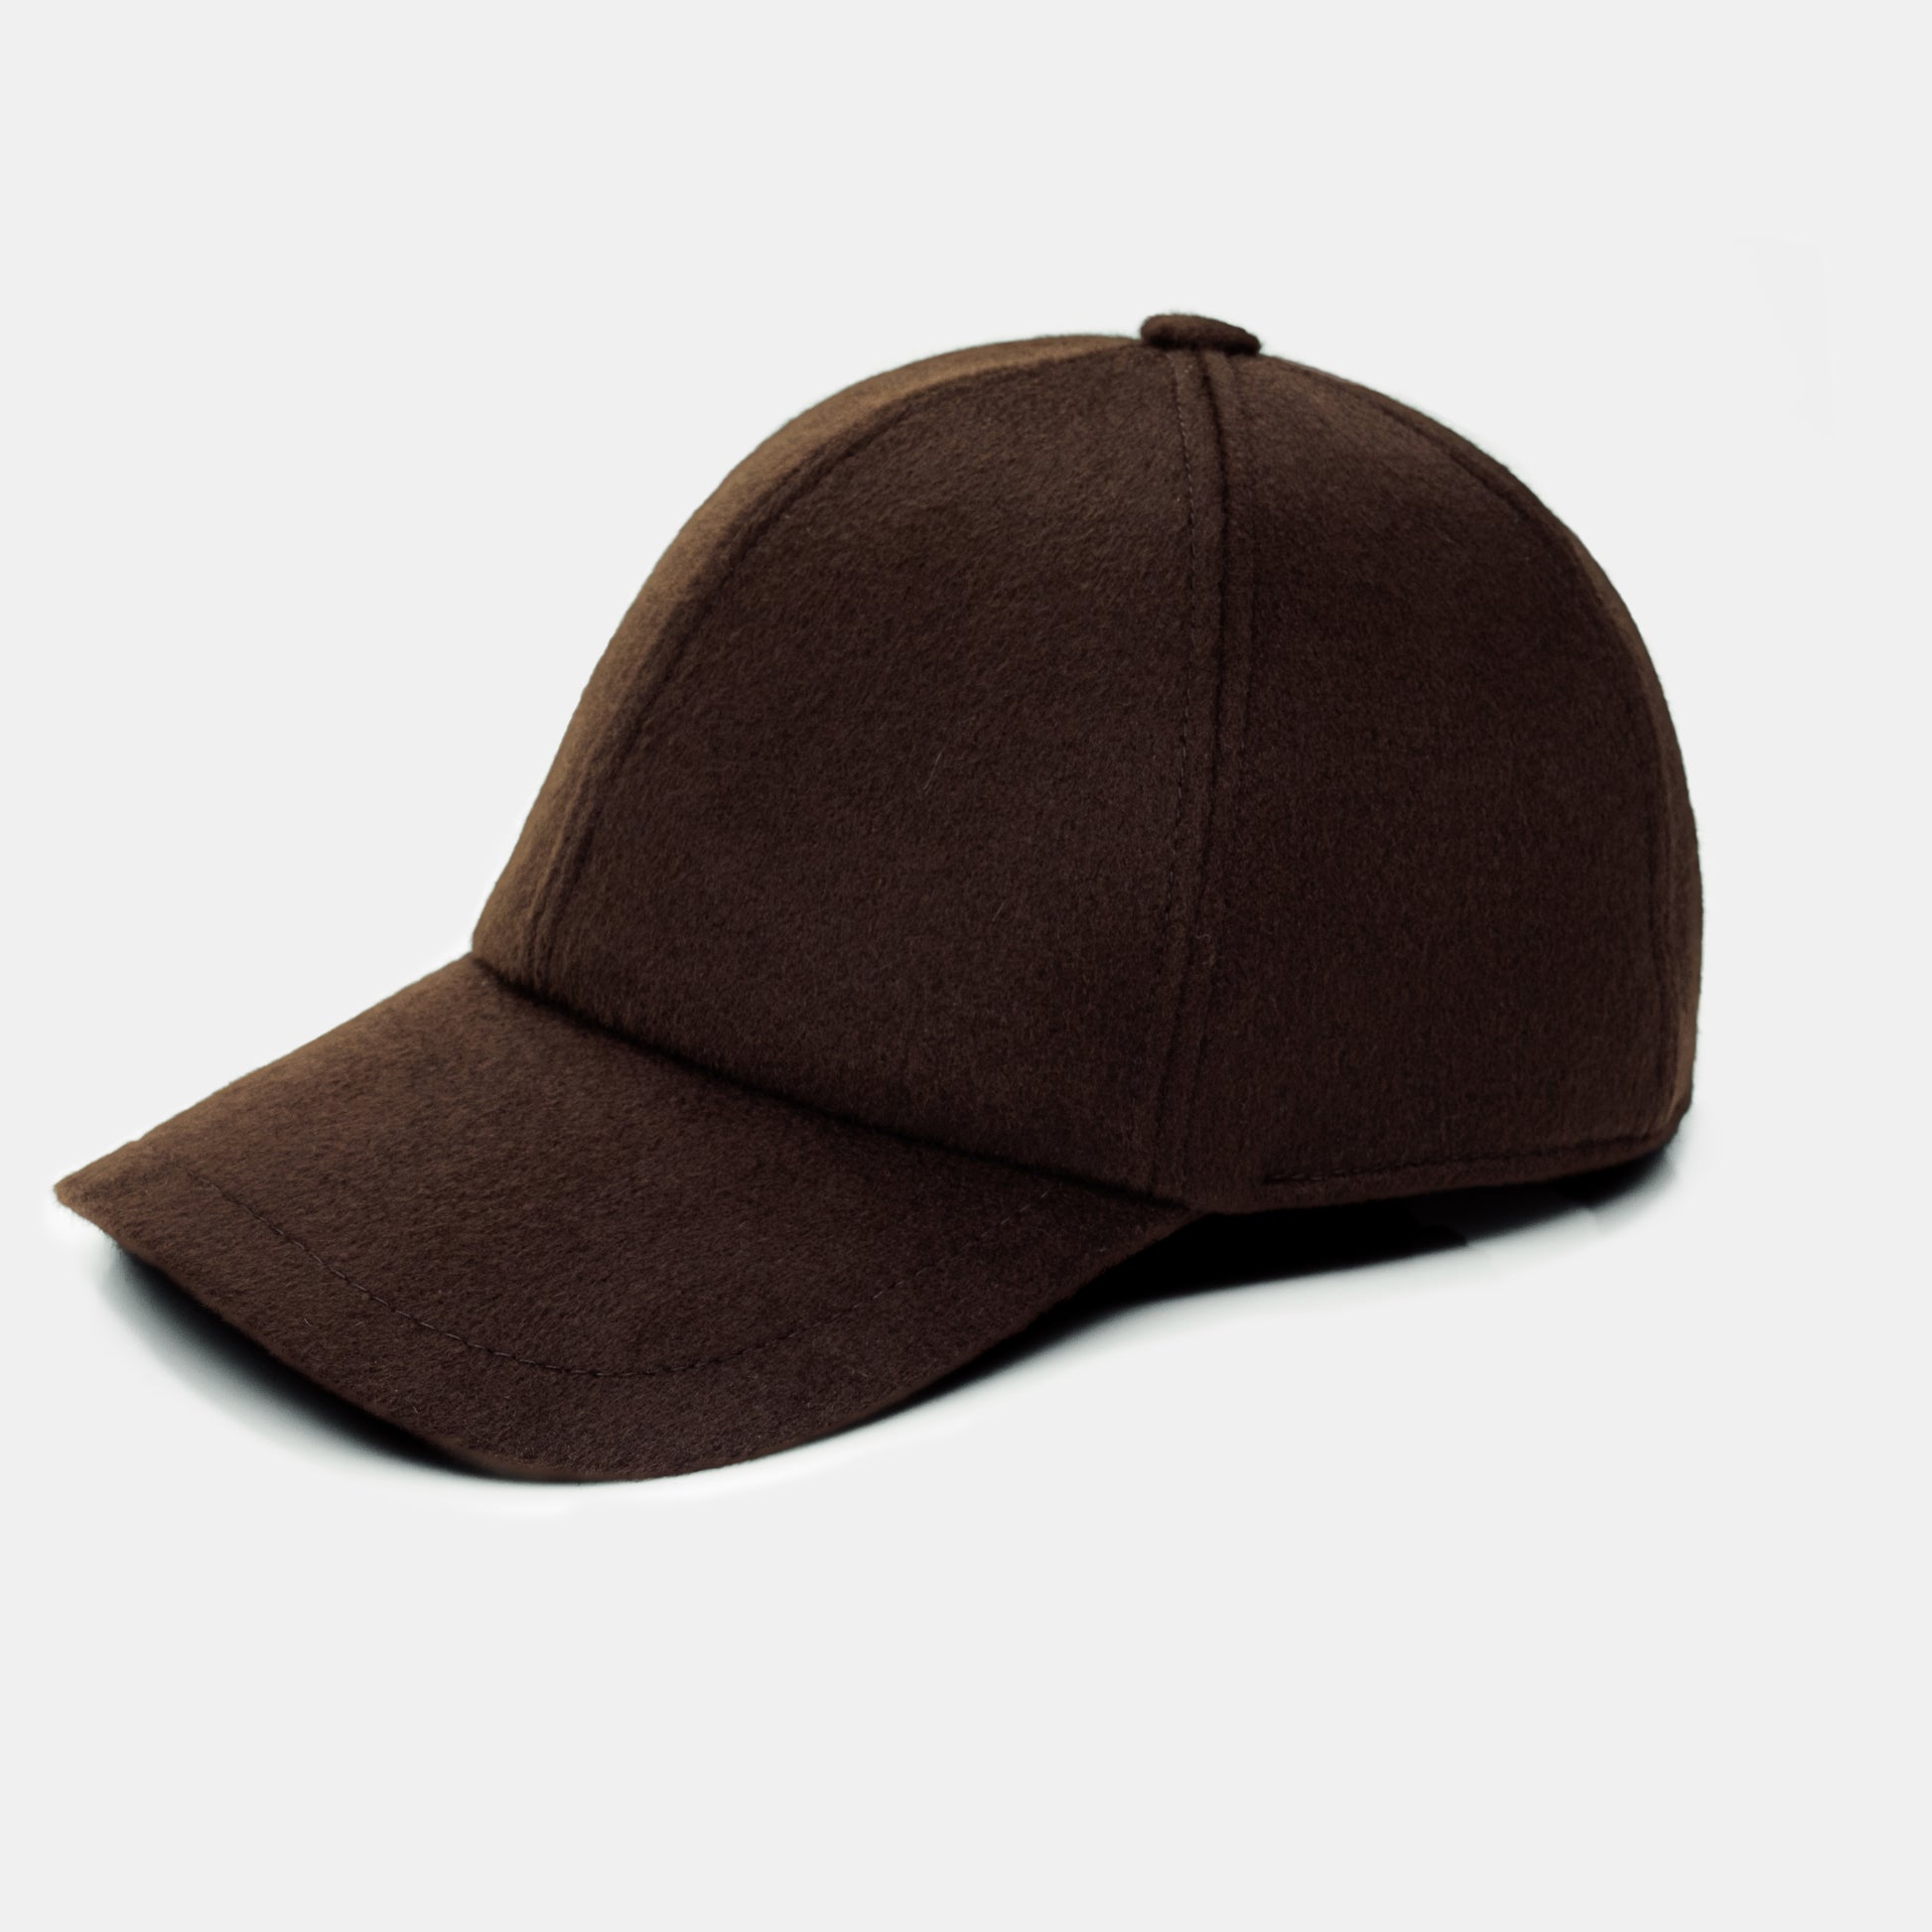 Loro Piana Baseball Cap N33 BASEBALL CAP 100% cashmere cap made in Italy luxury baseball cap dark brown loro piana cashmere, unisex, high quality handmade cap artisan-made hat 